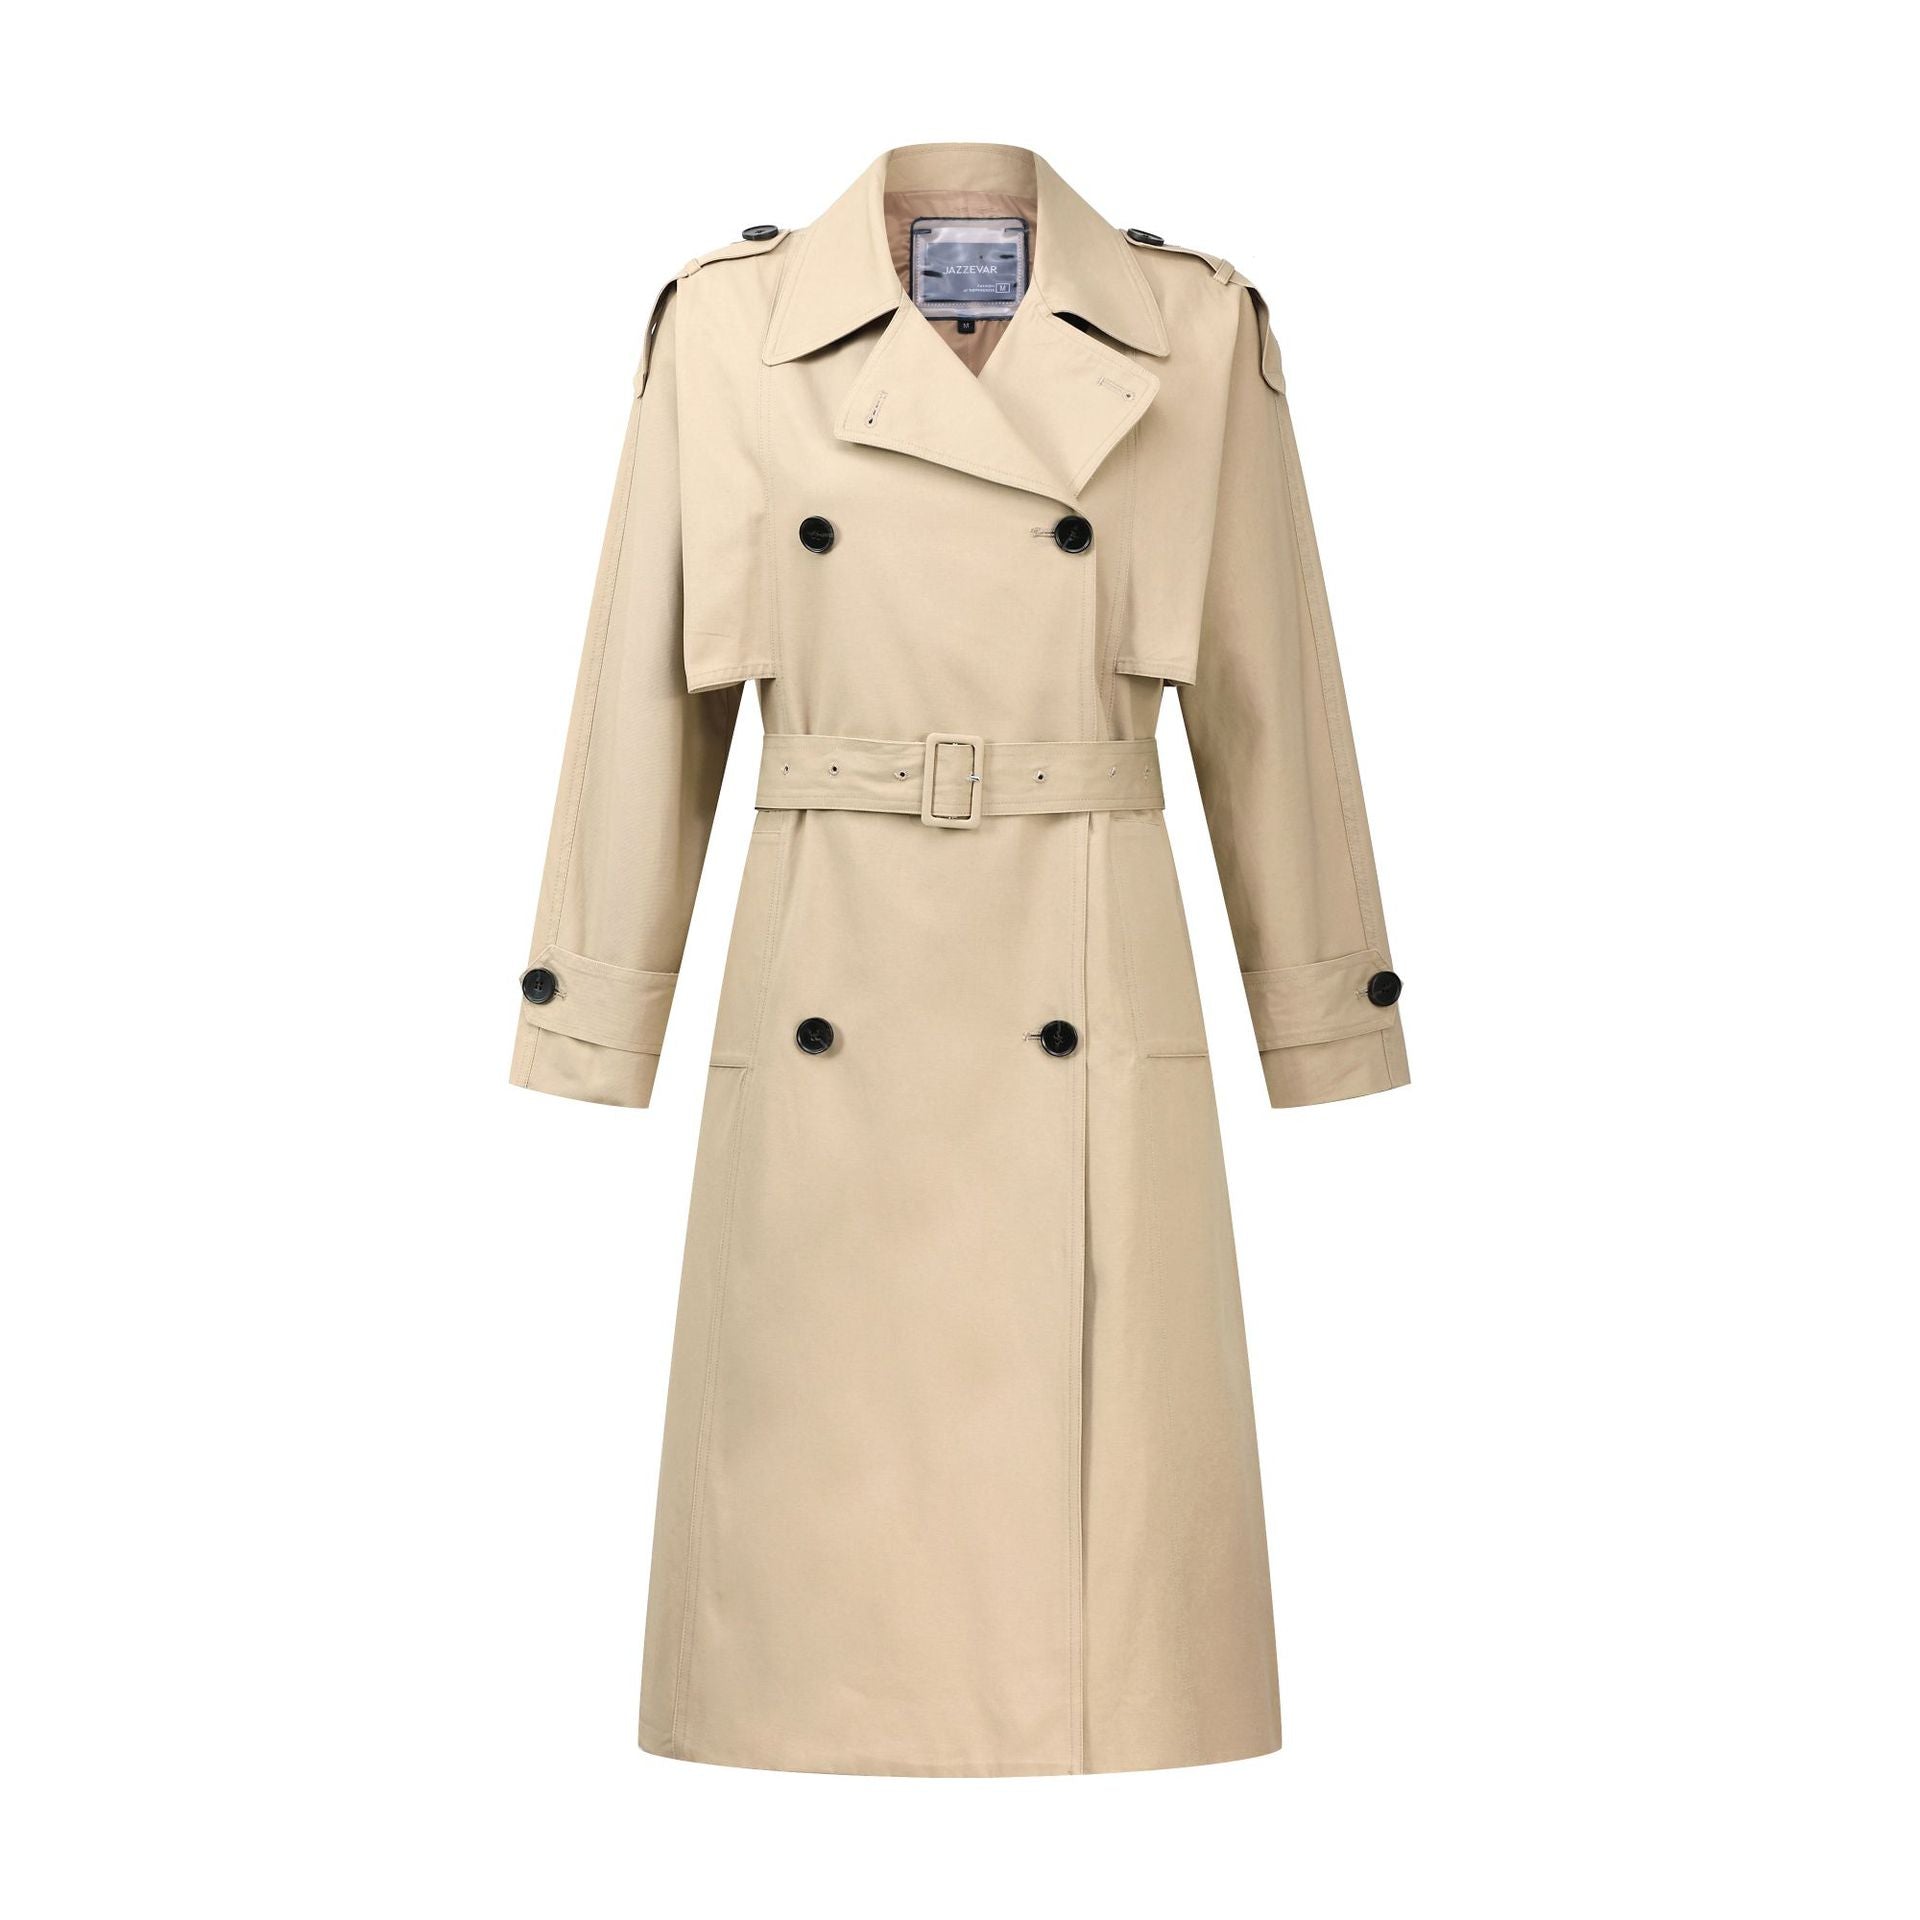 Elegant Fall Women Wind Break Long Overcoats-Coats & Jackets-Khaki-S-Free Shipping at meselling99